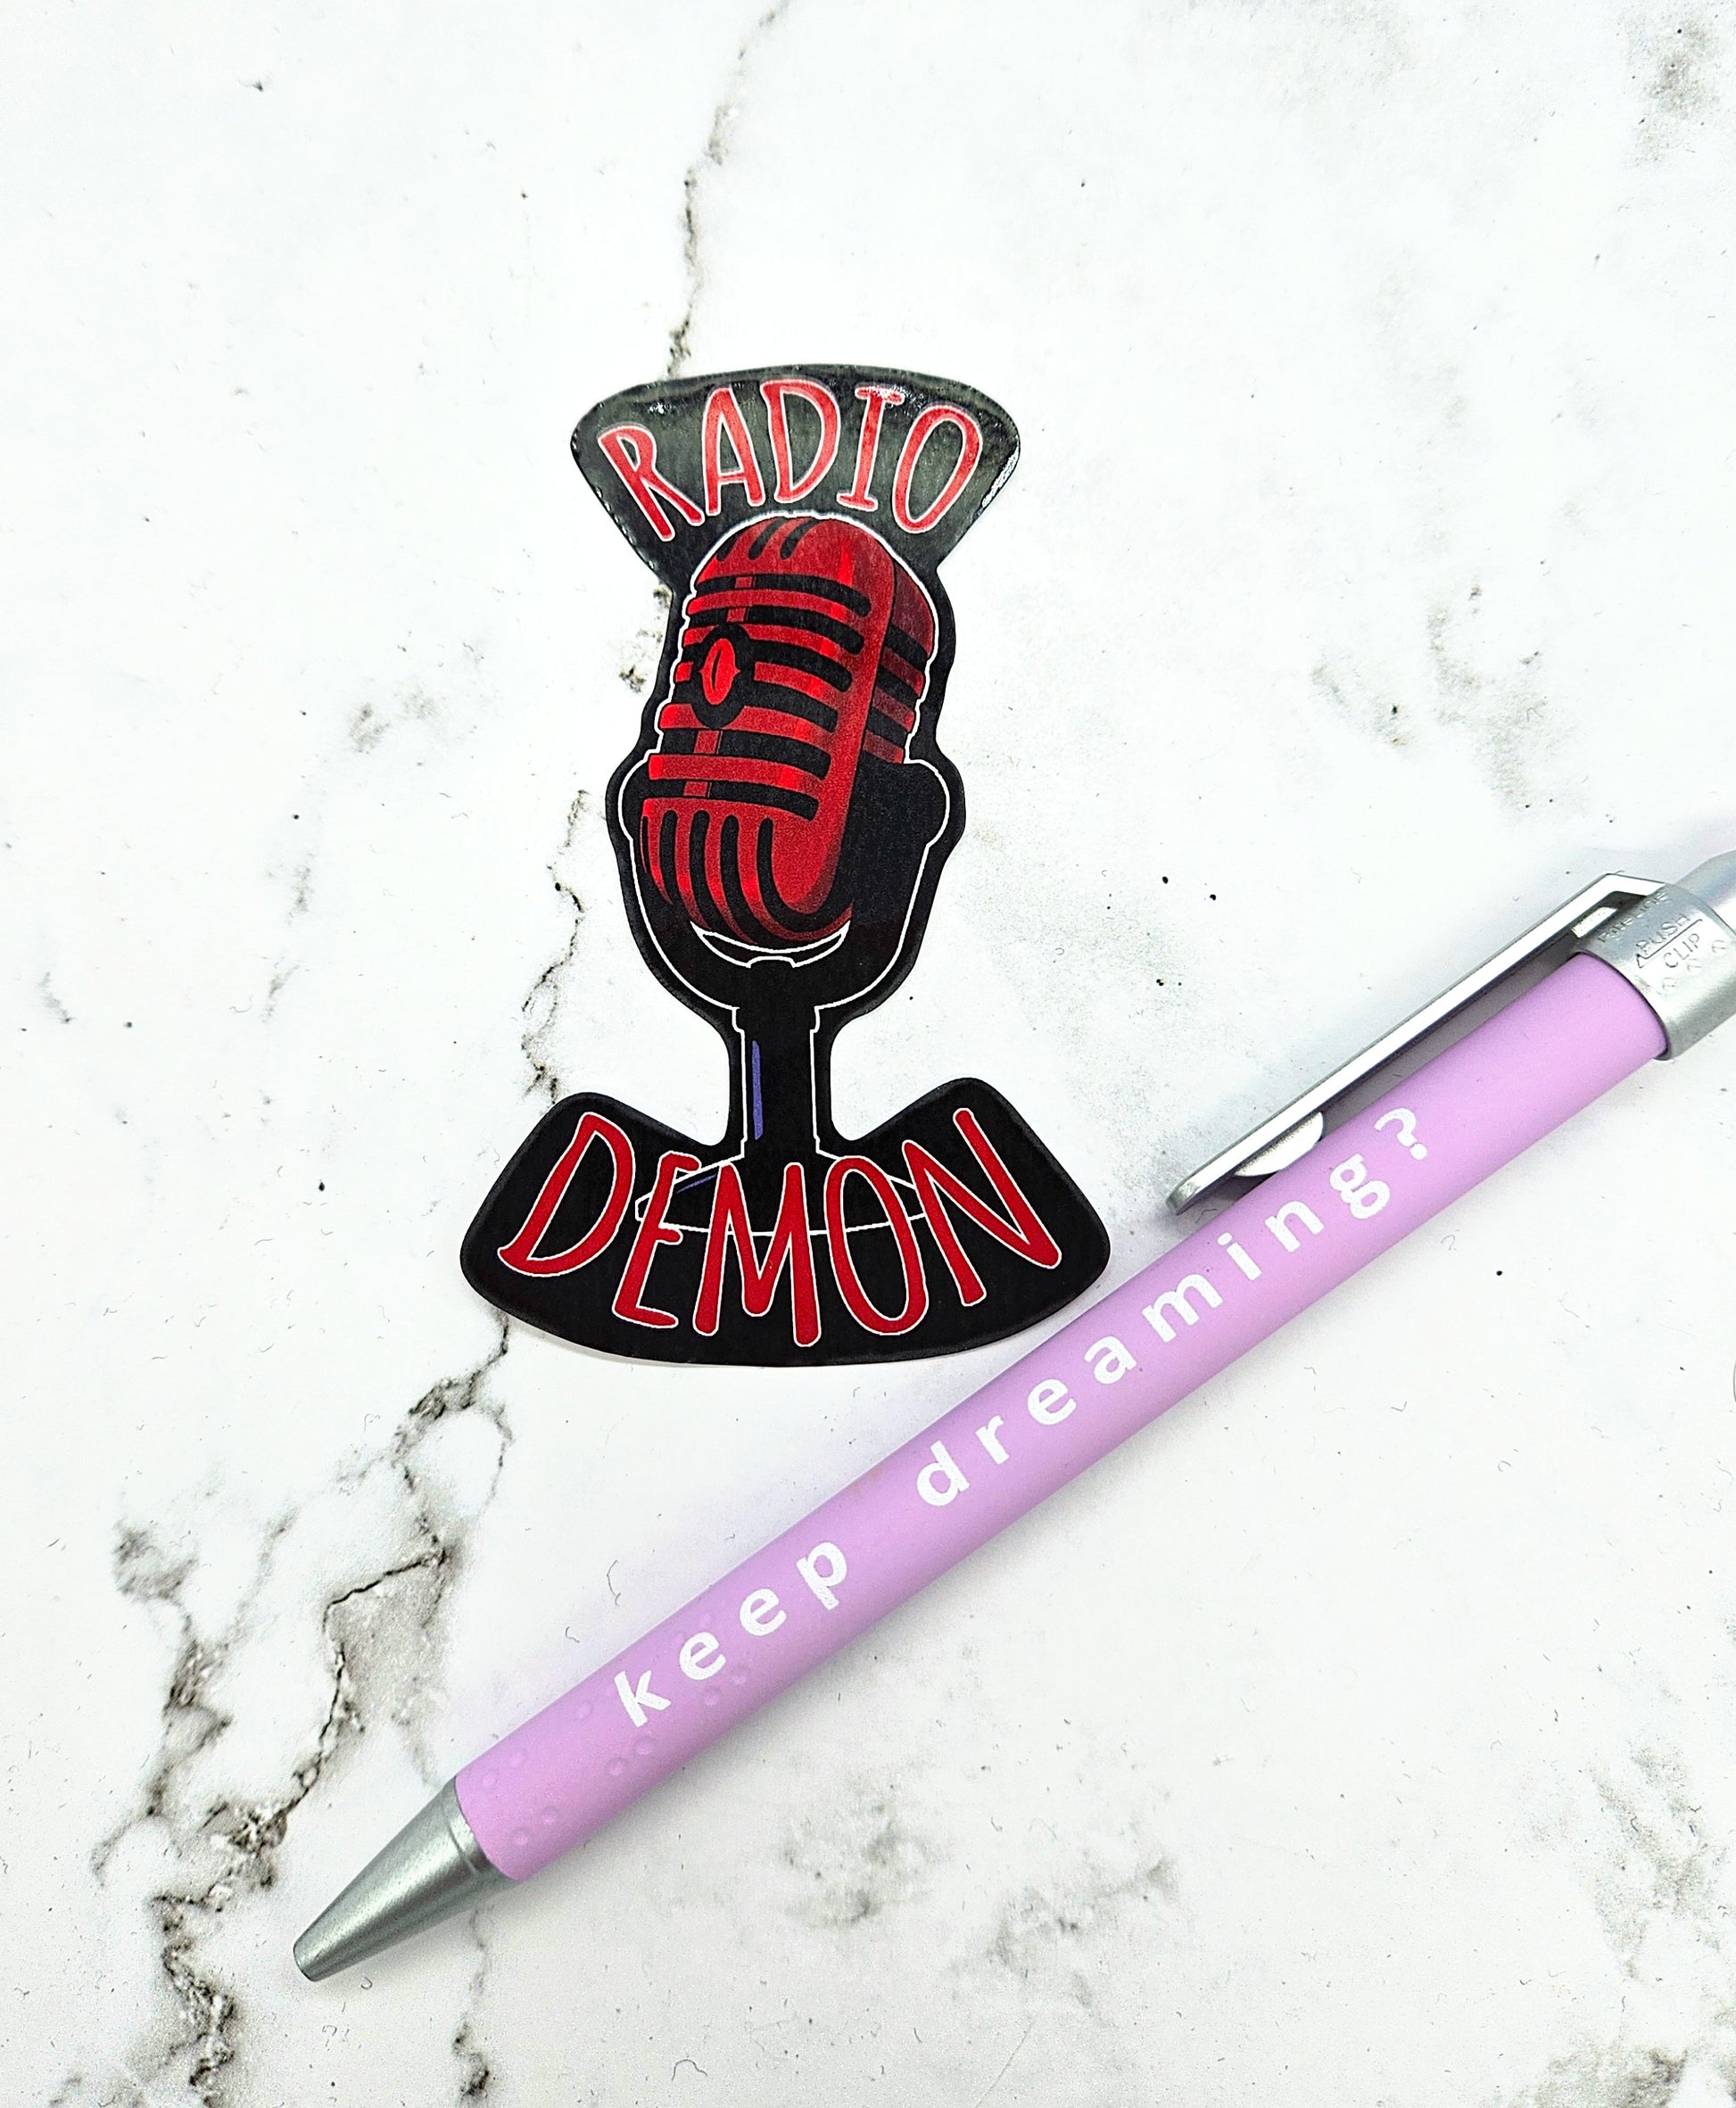 Radio Demon Sticker - Alastor, Creepy Goth Vibes, Demonic Has-Been, Retro Hell Aesthetic